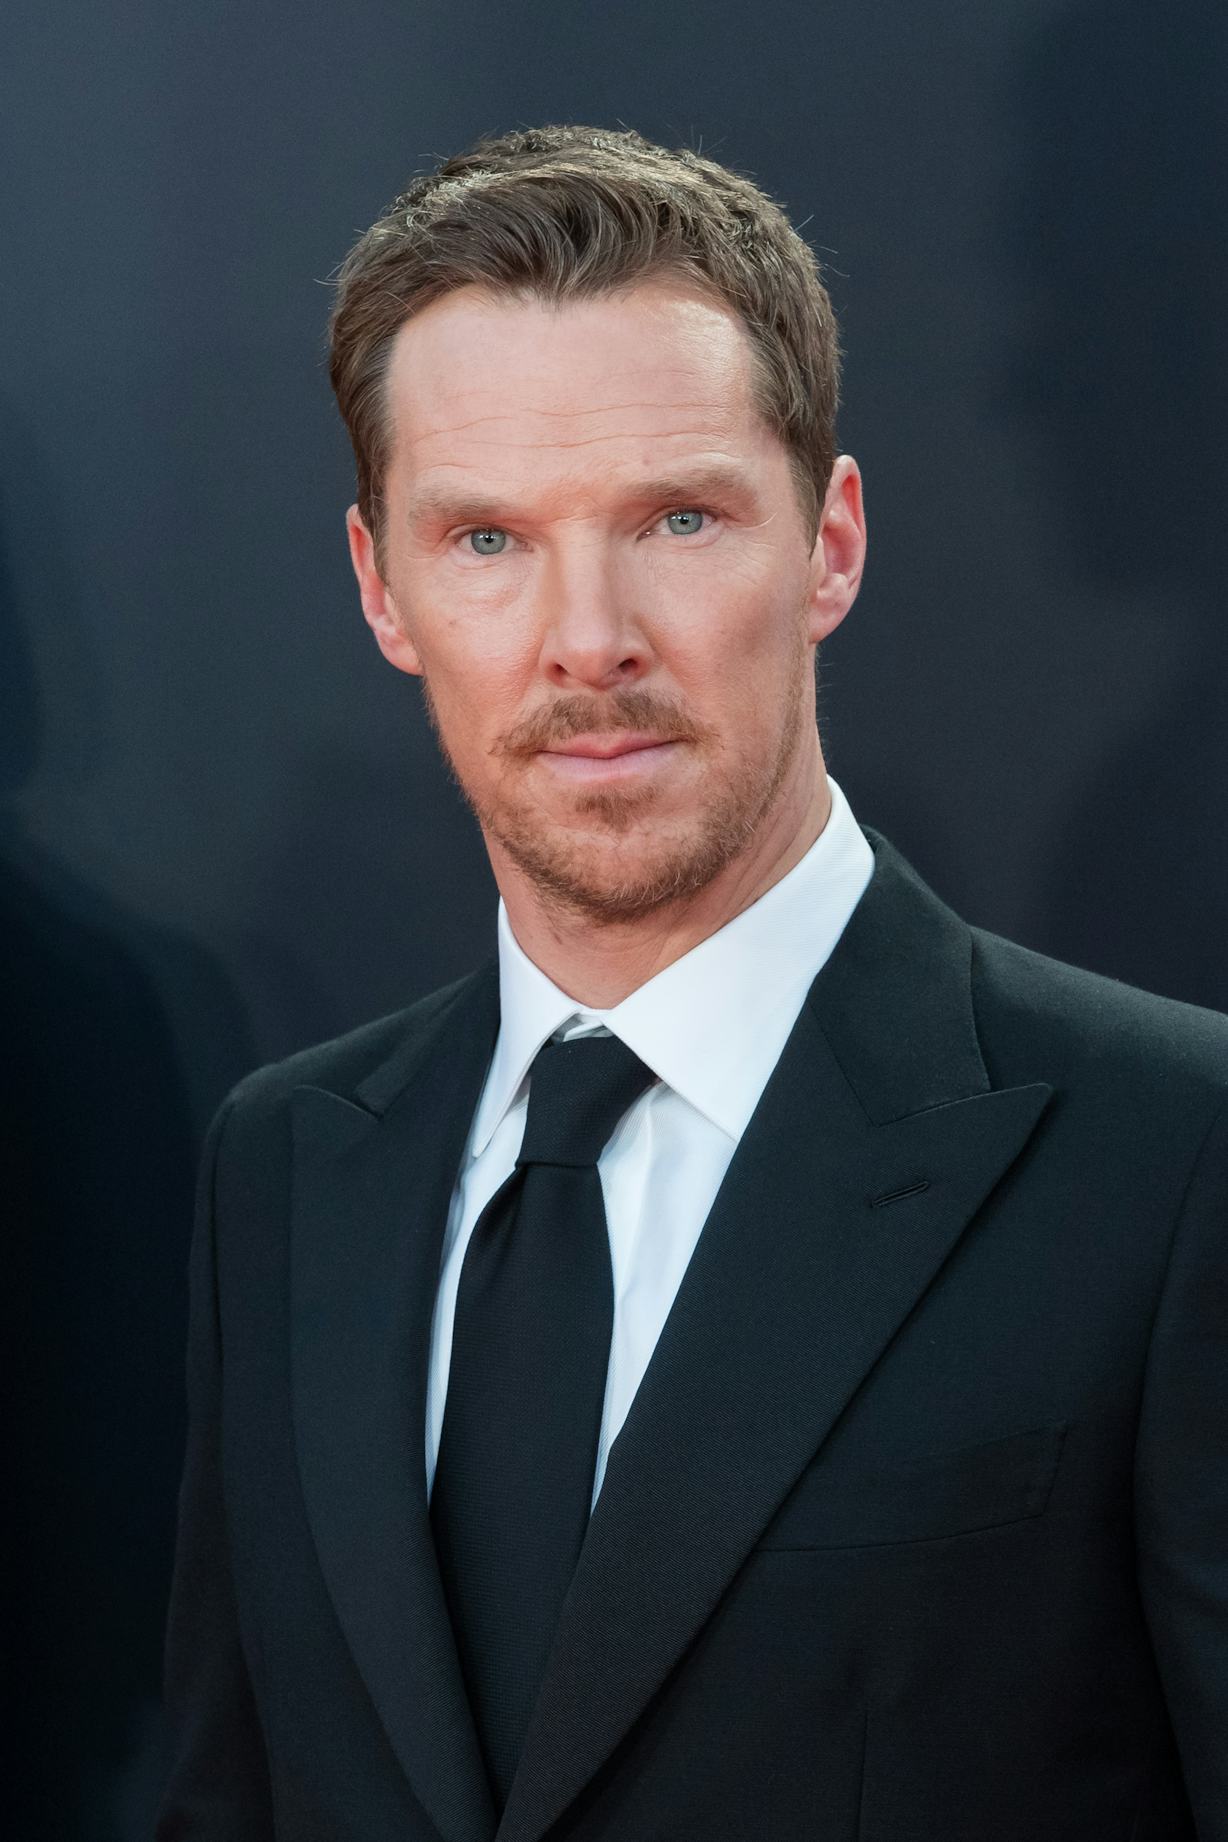 How To Watch Benedict Cumberbatch's 'Londongrad' In The UK